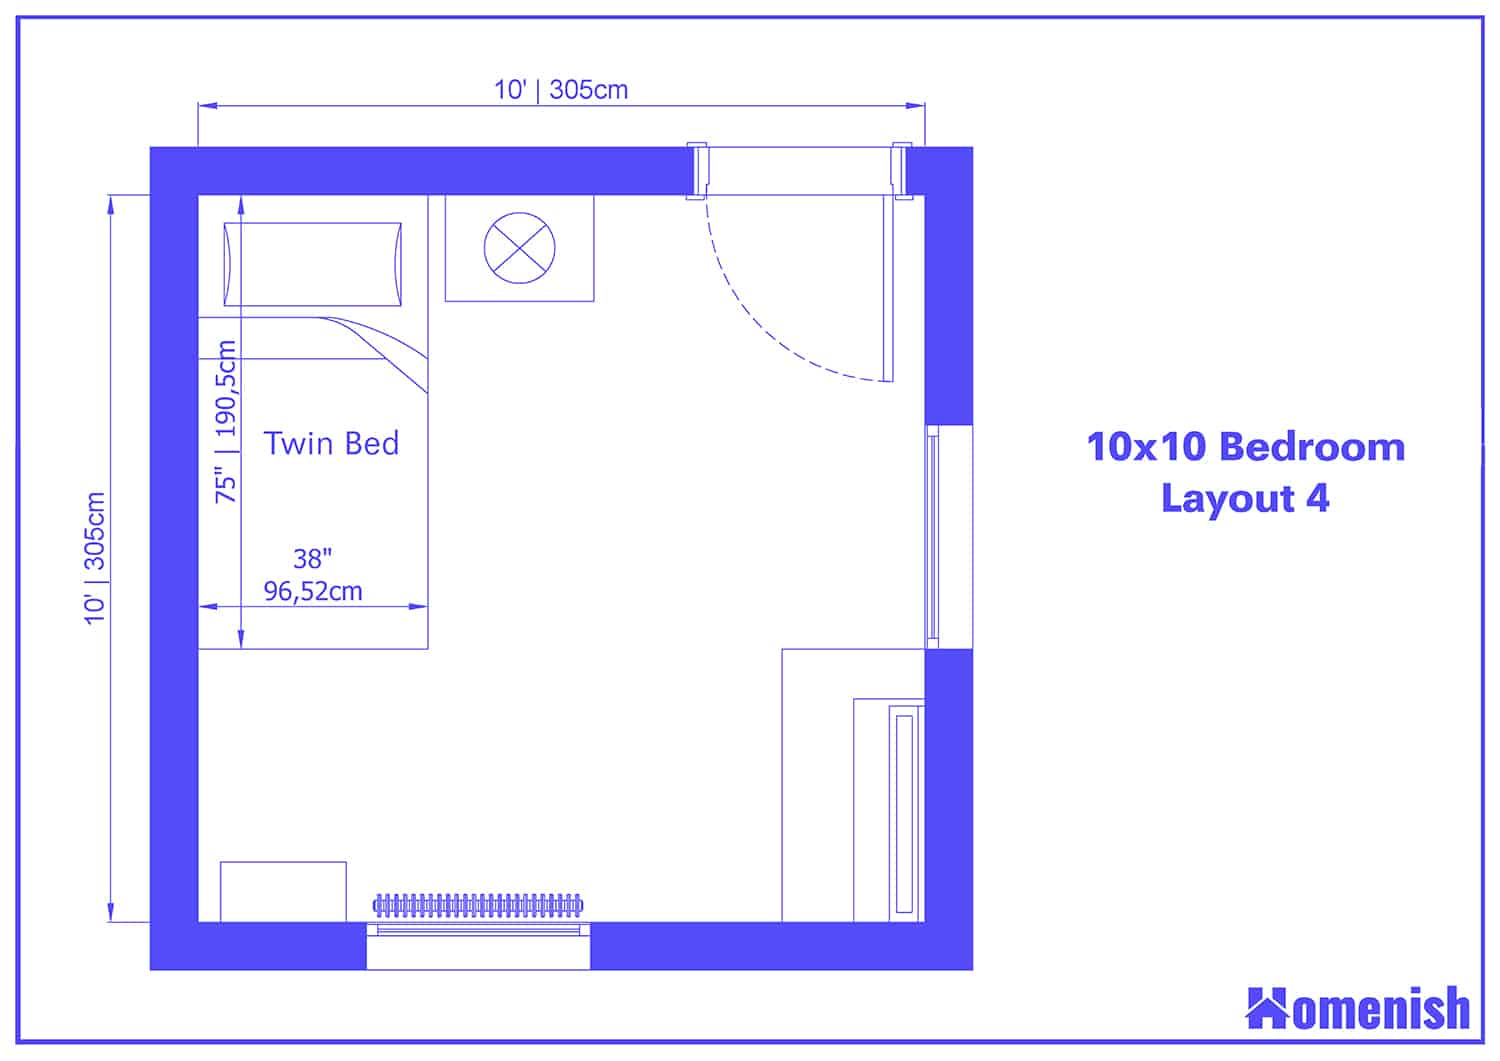 10x10 Bedroom Layout 4